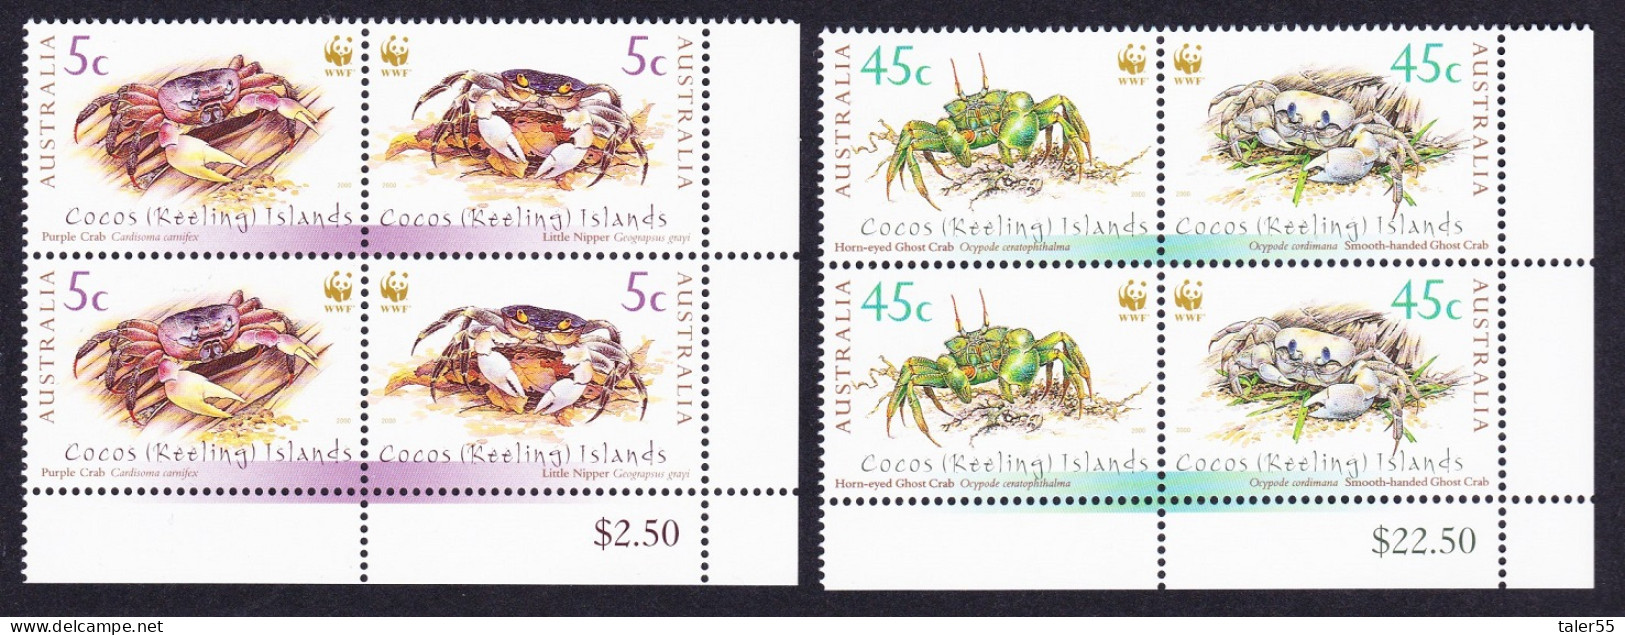 Cocos (Keeling) Is. WWF Crabs Pairs Corner Blocks 2000 MNH SG#389-392 MI#400-403 Sc#333-334 A-b - Cocos (Keeling) Islands